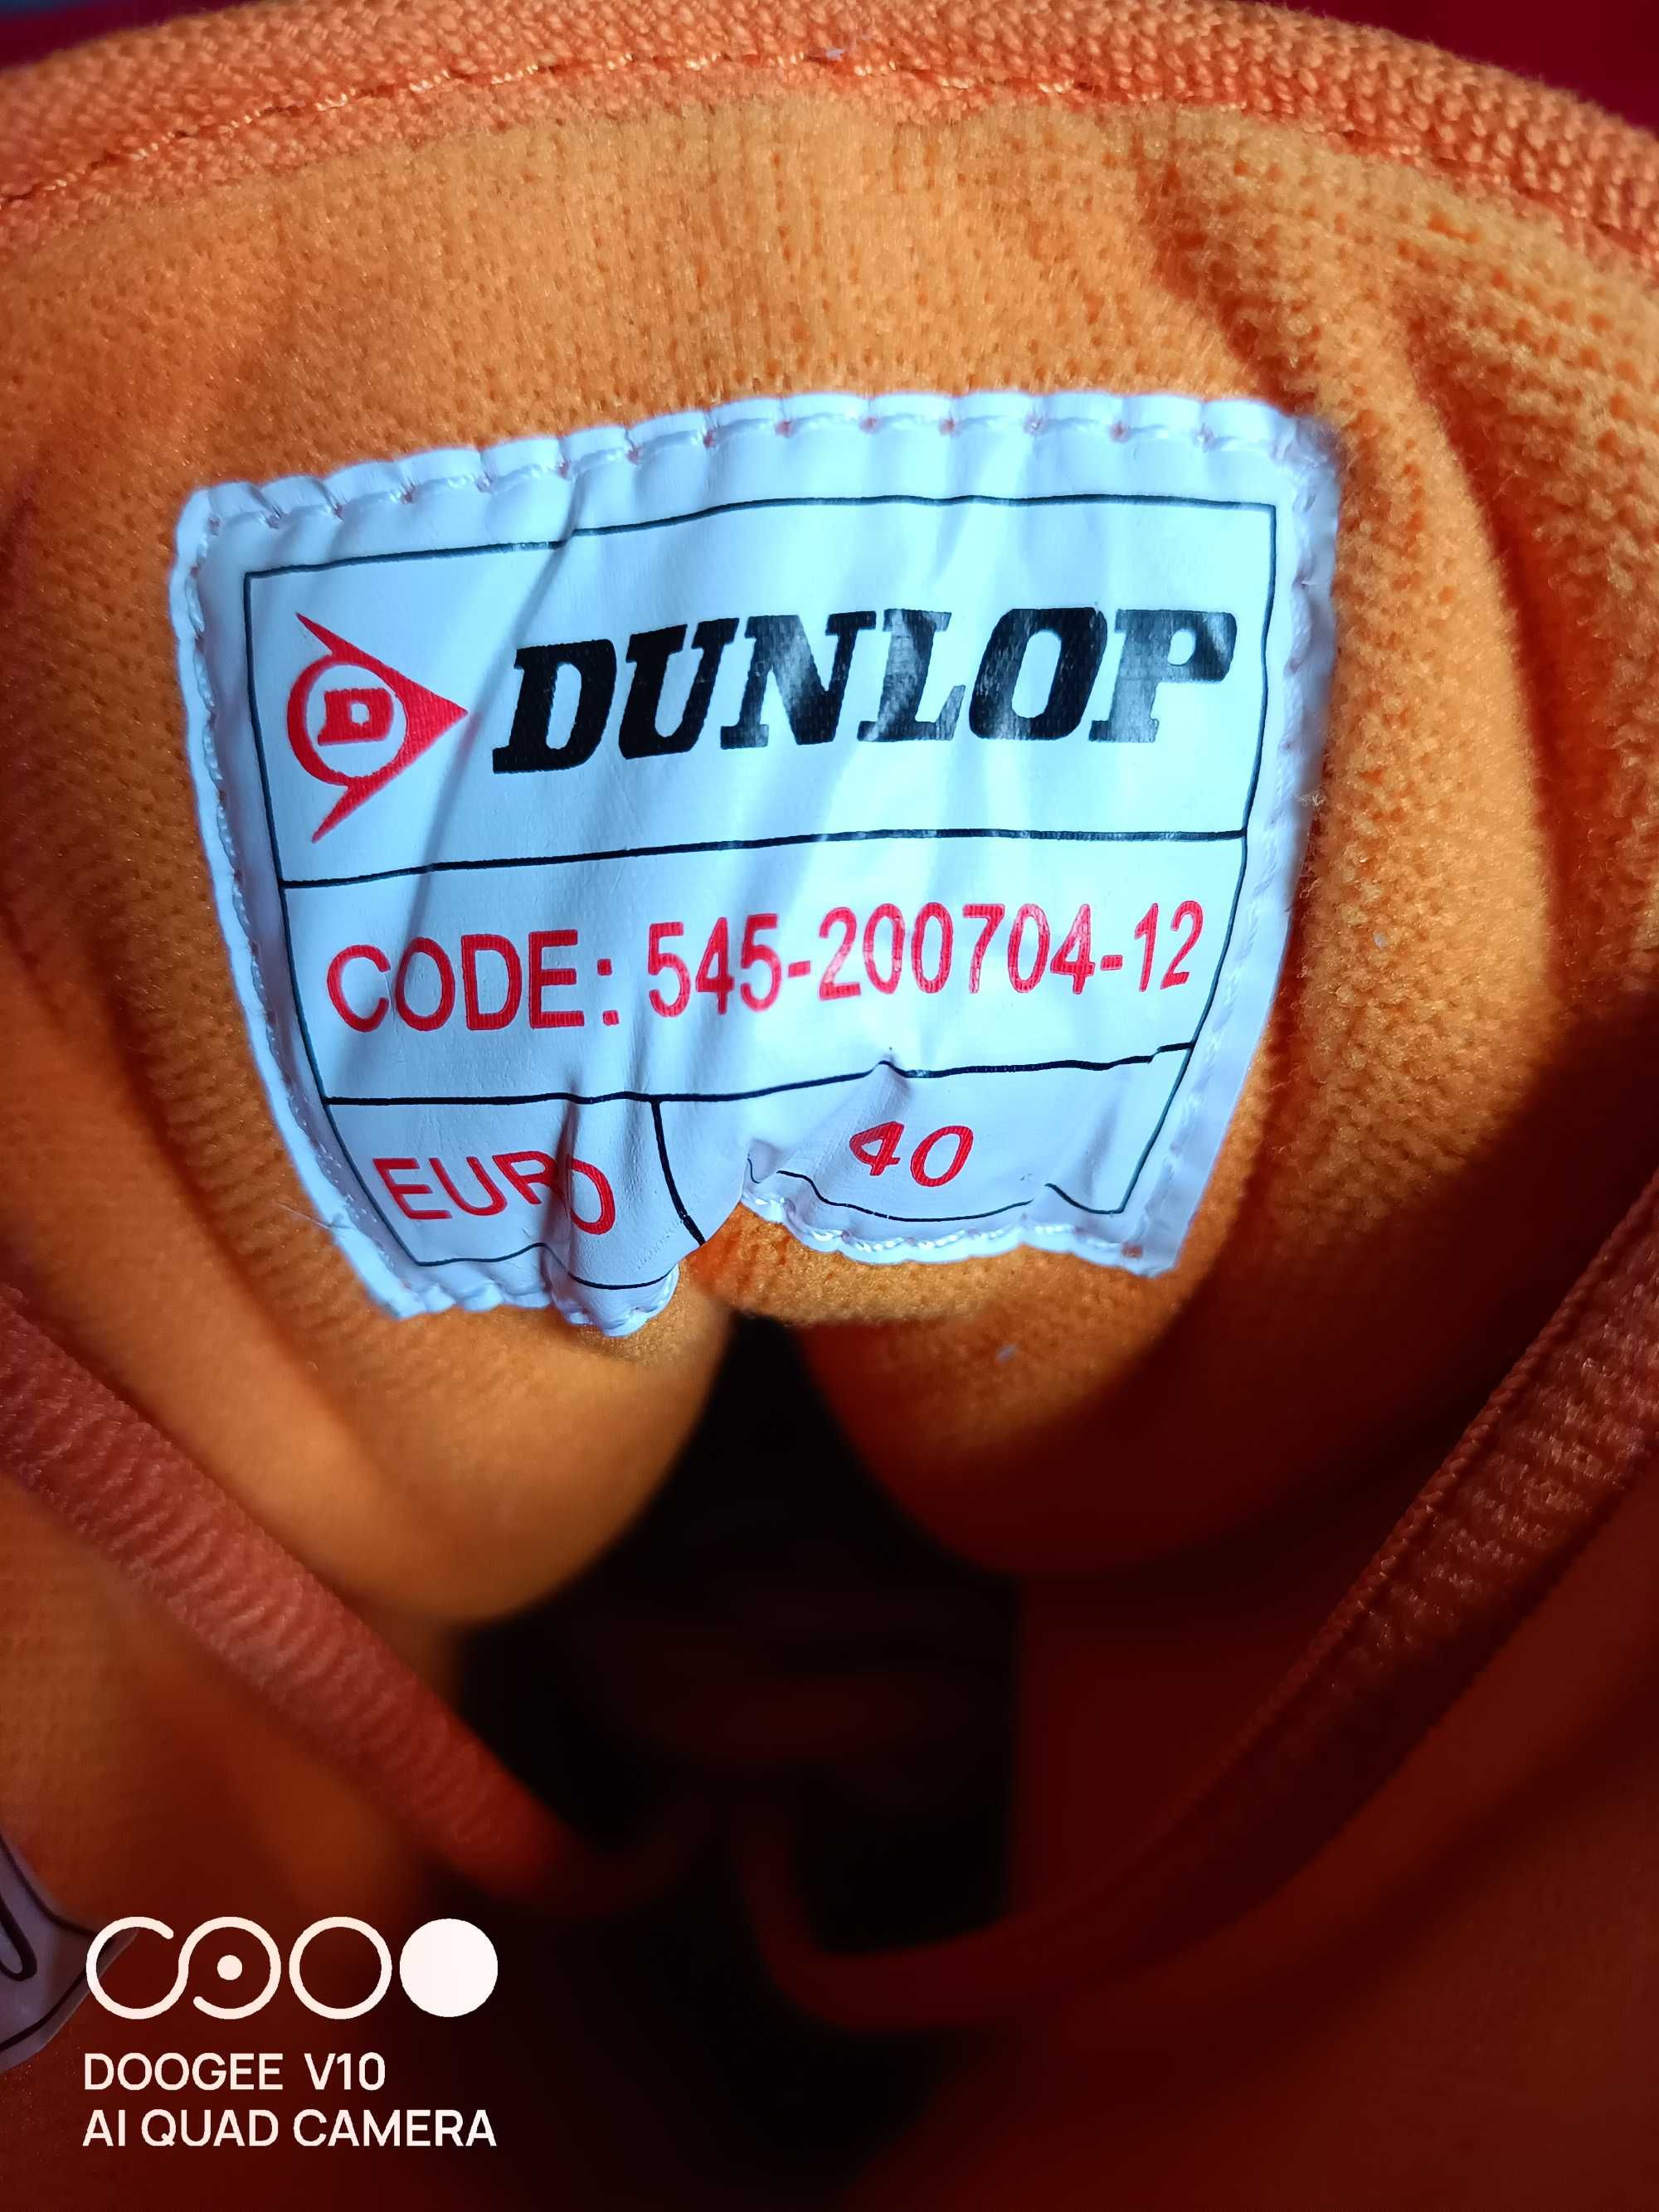 NOWE Buty Dunlop 40 żółte i pomaranczowe UNISEX Sport